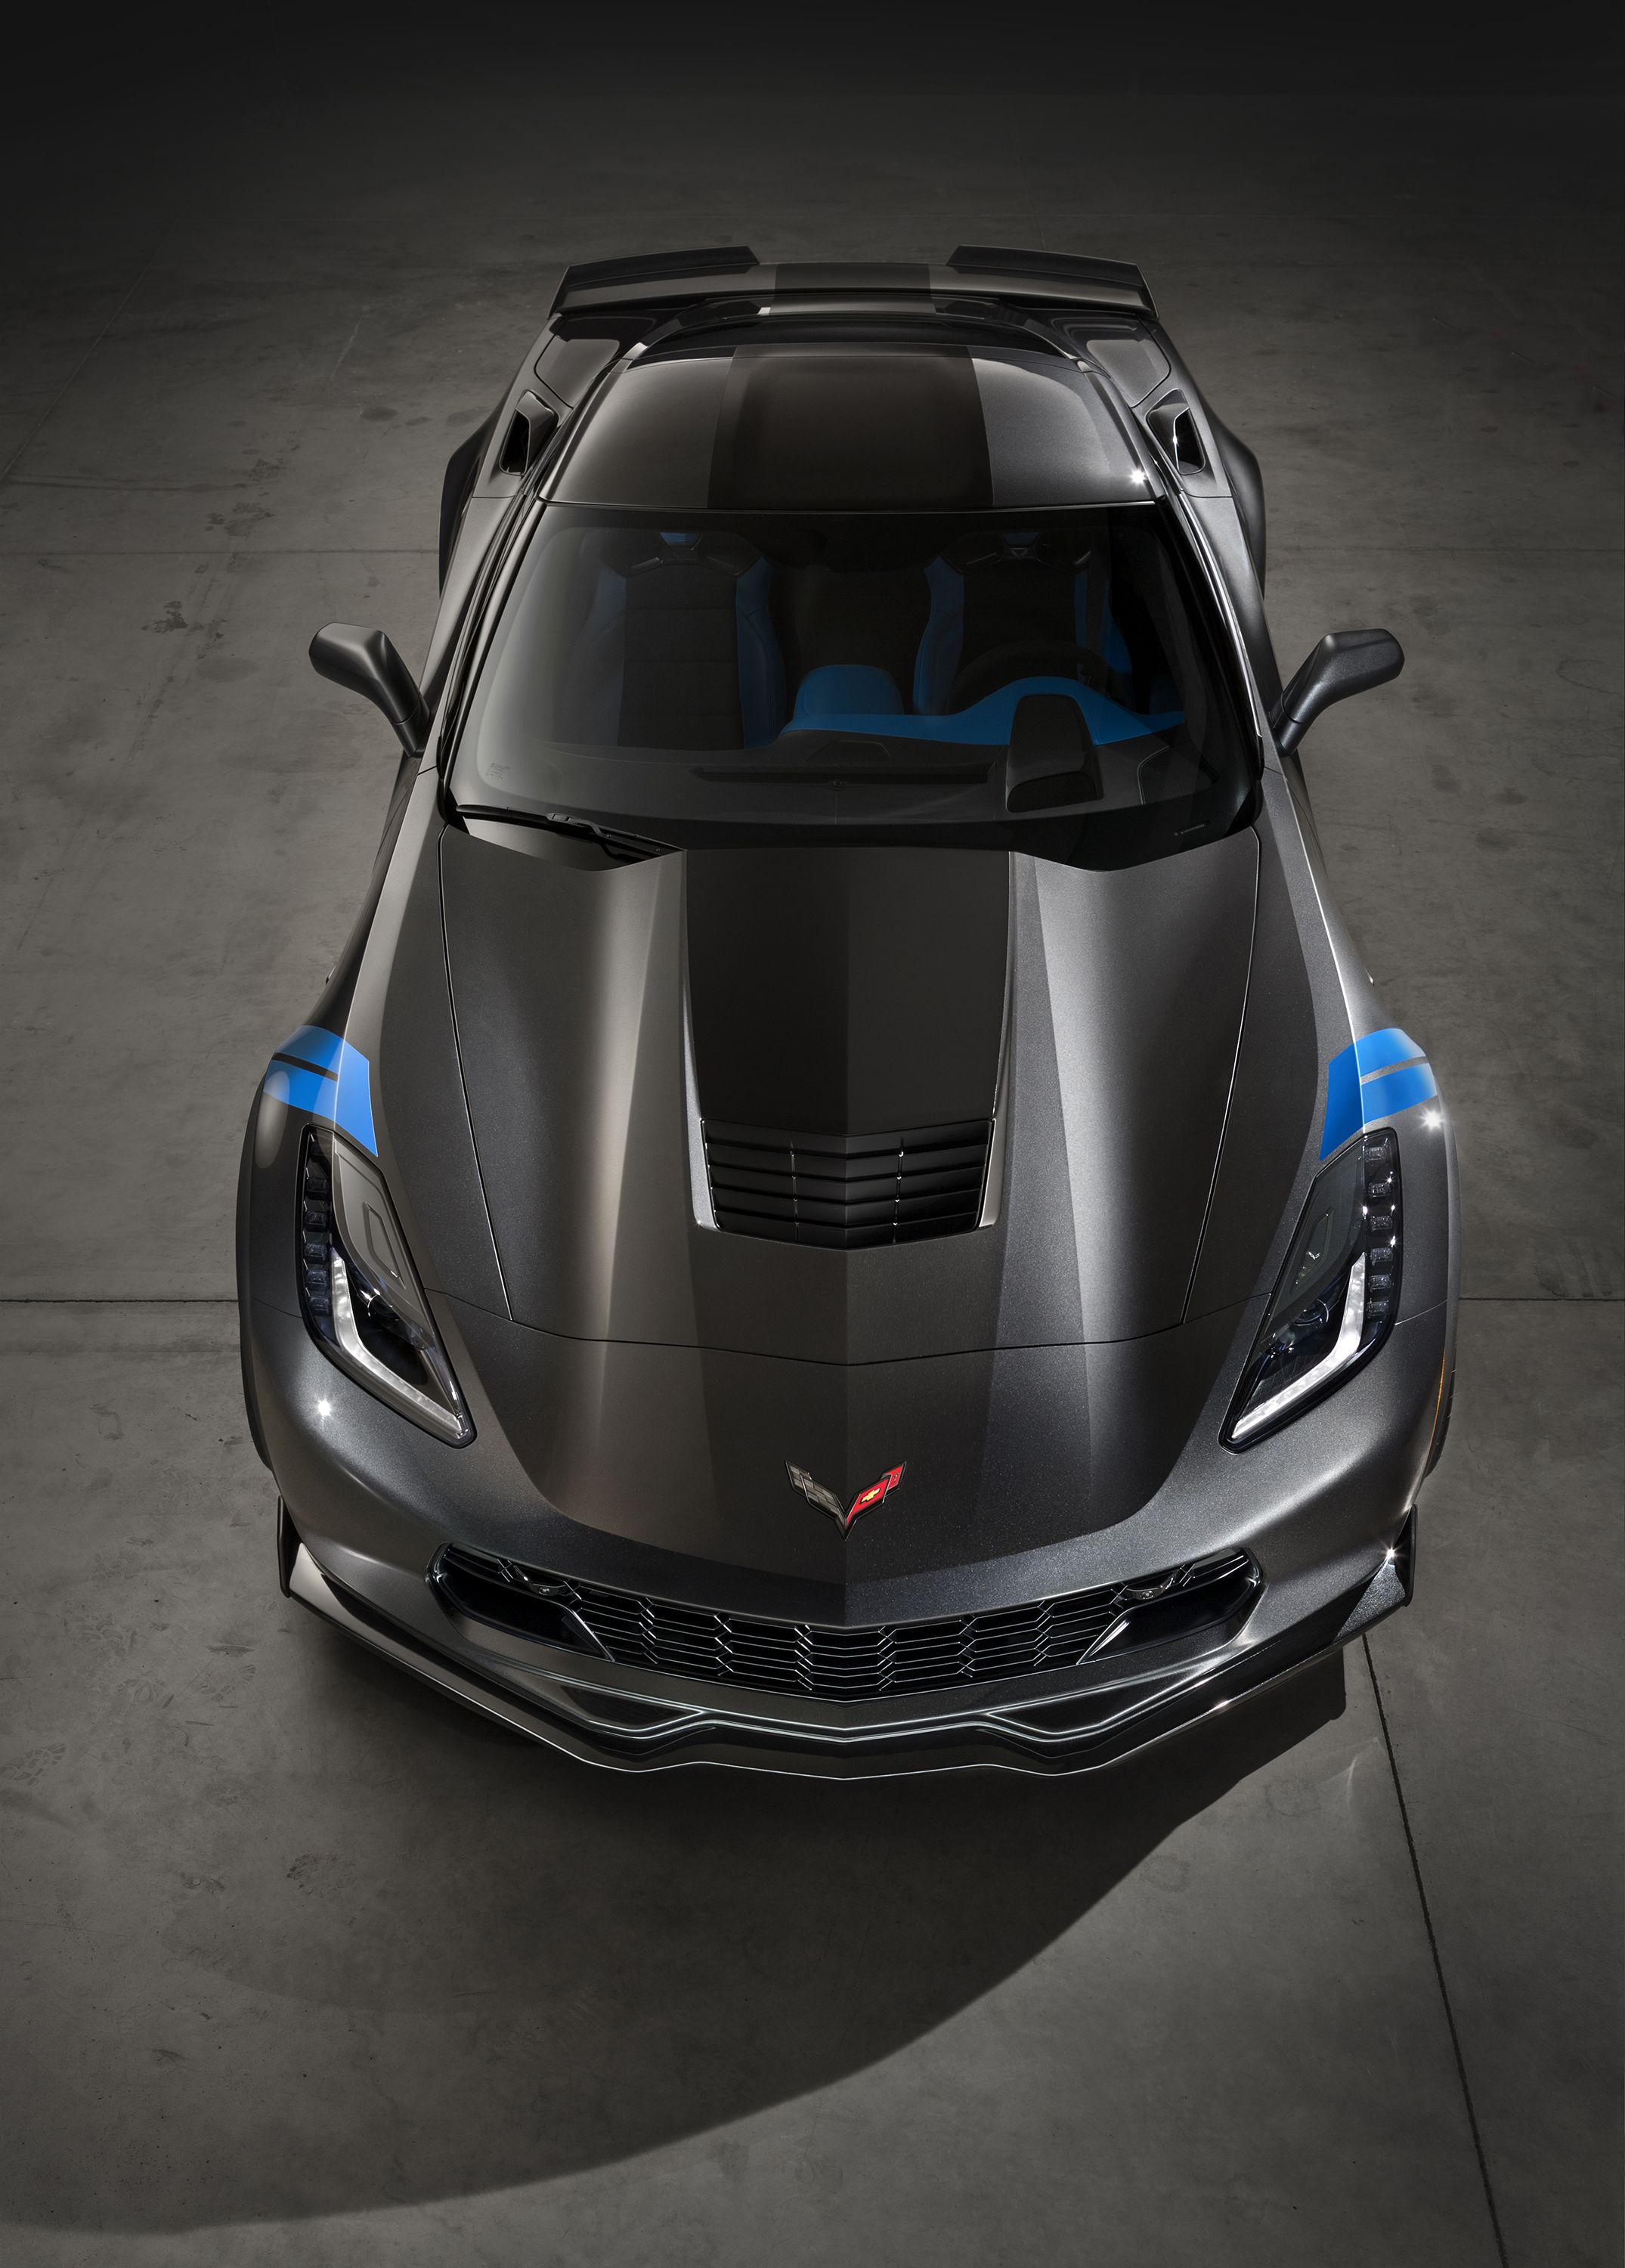 2017 Corvette Grand Sport Has Racing Roots – National Corvette Museum